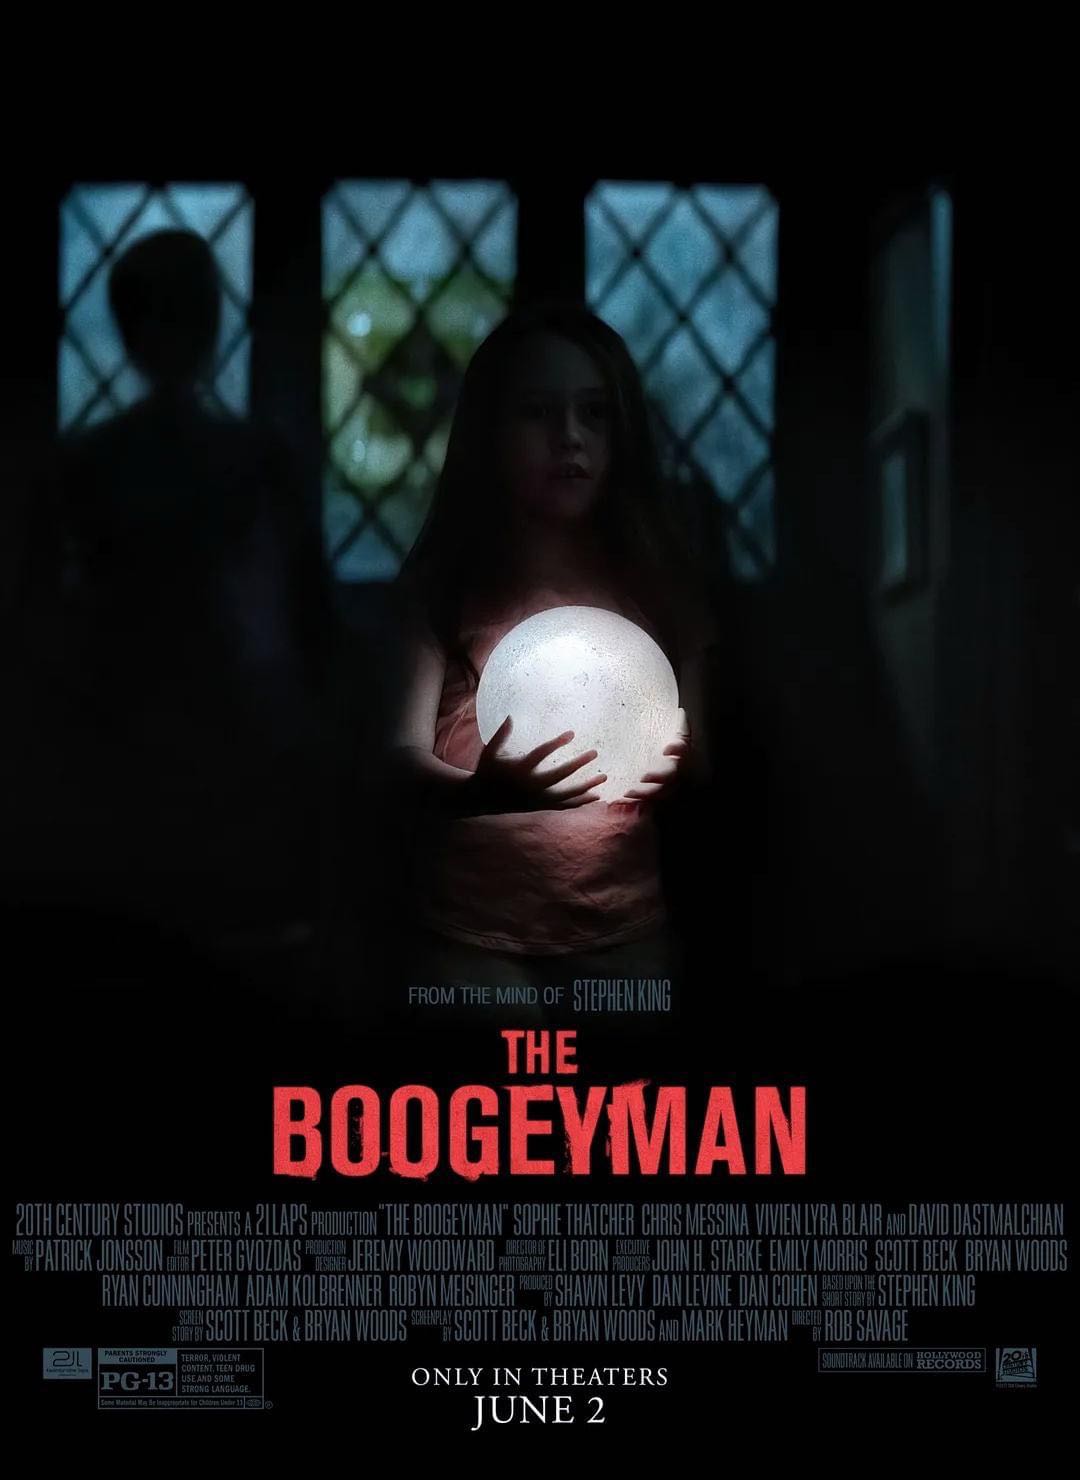 THE BOOGEYMAN (7.5/10) หนังสยองขวัญเรื่องใหม่ จากเรื่องสั้น สตีเวน คิง l ไม่แปลกใหม่ แต่หลอน